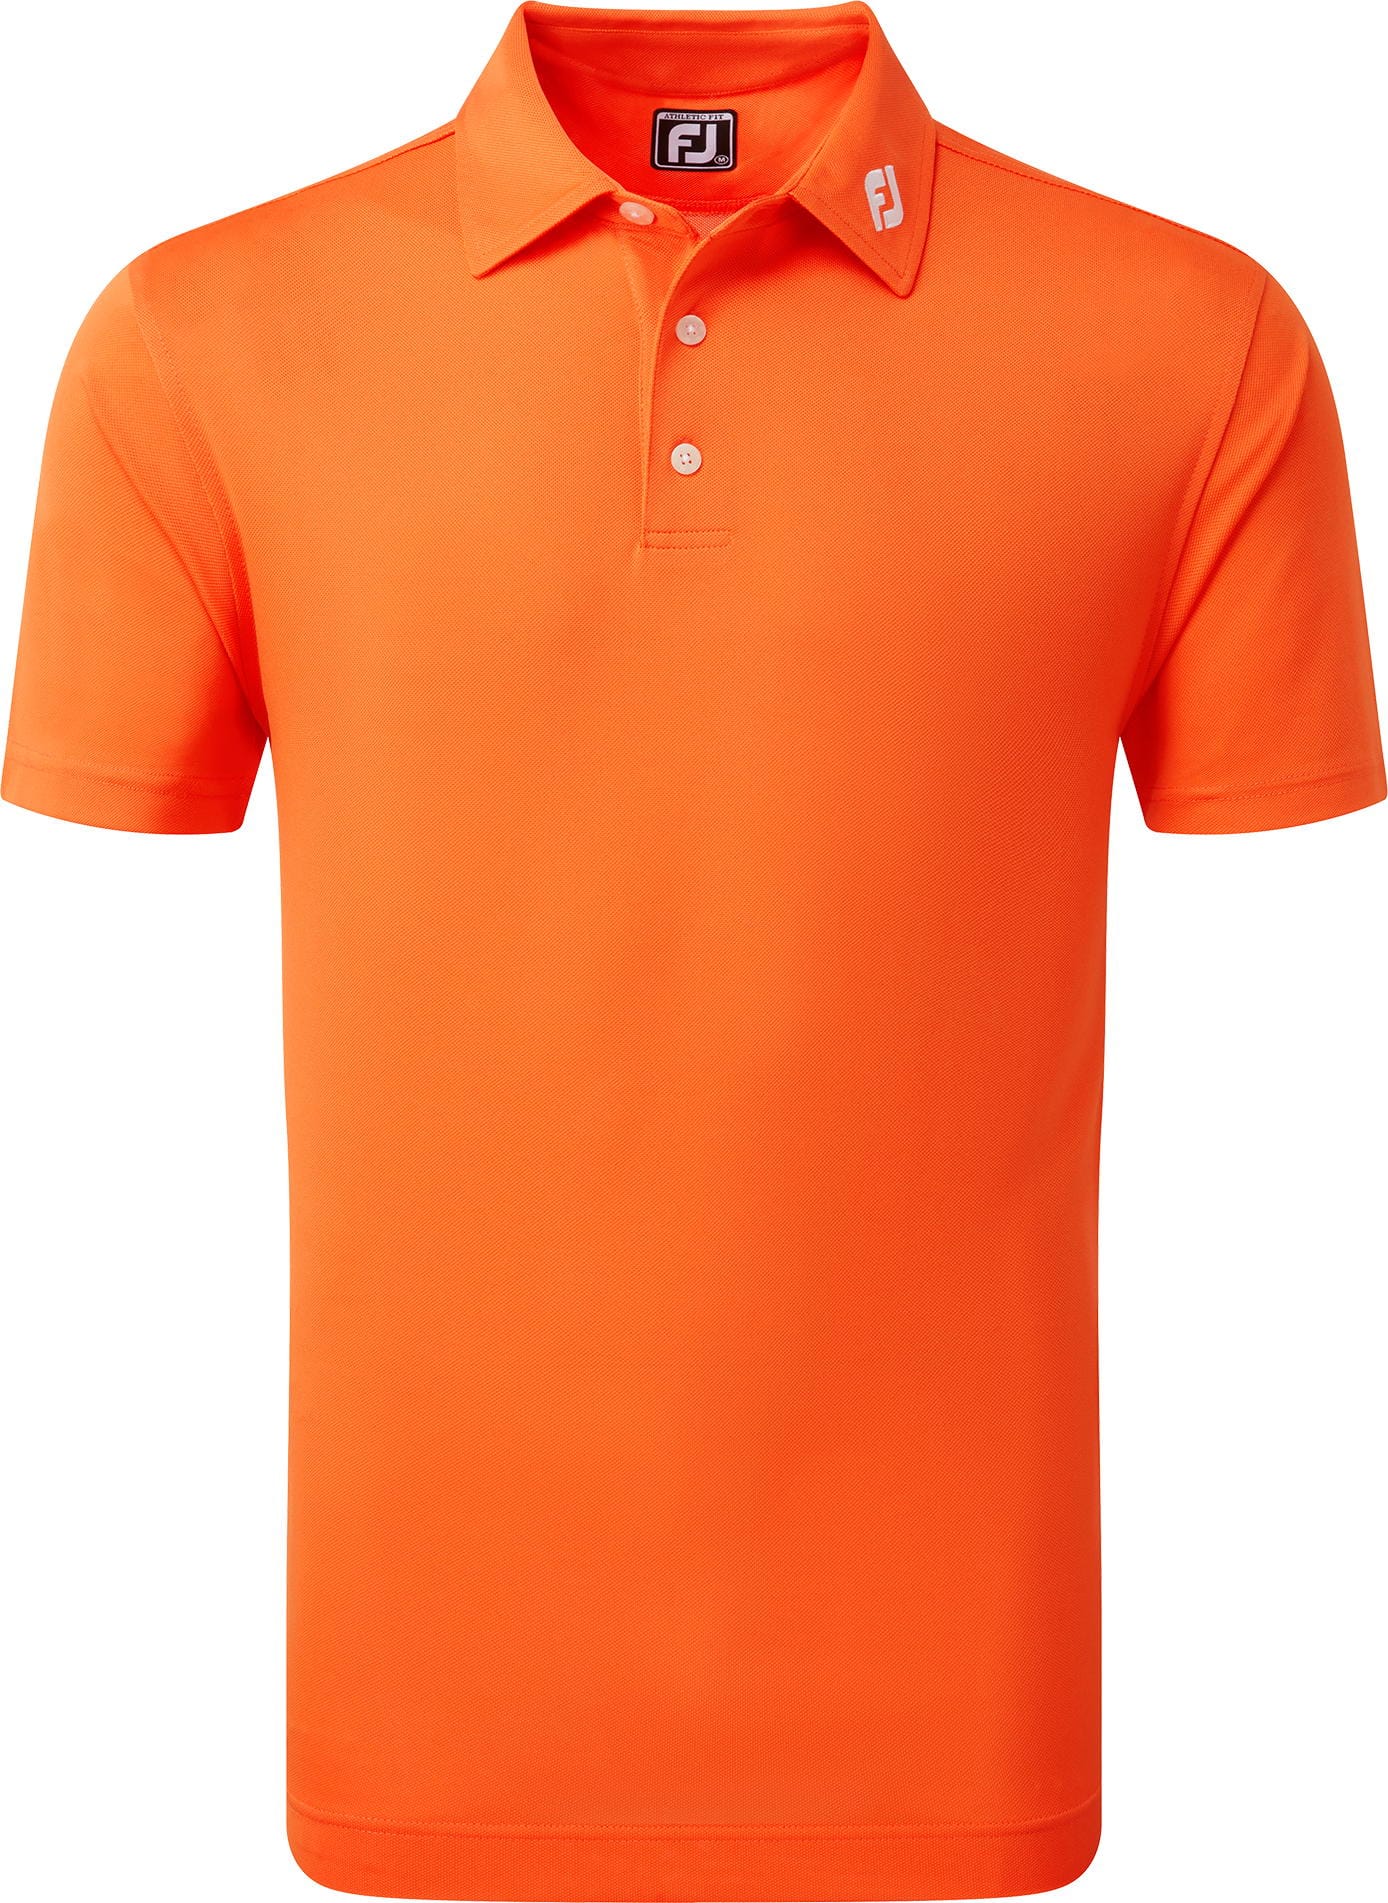 FootJoy Stretch Pique Solid Polo, orange